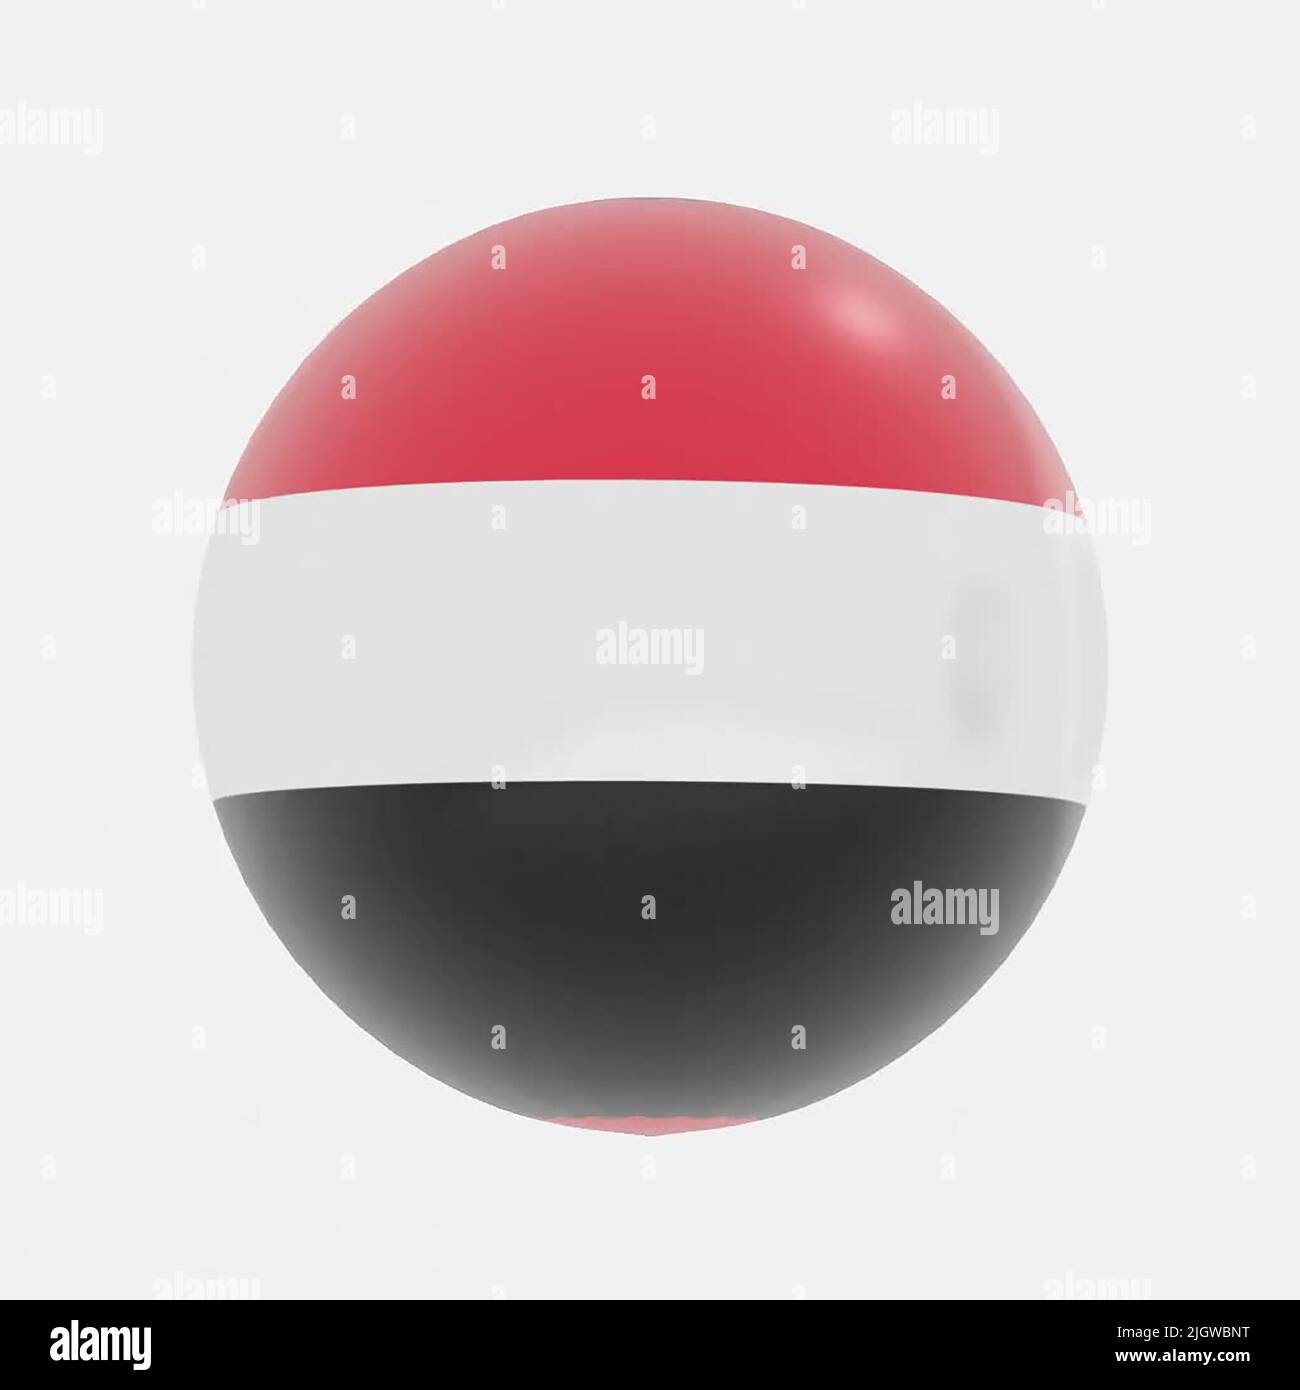 3d render of globe in Yemen flag for icon or symbol. Stock Photo